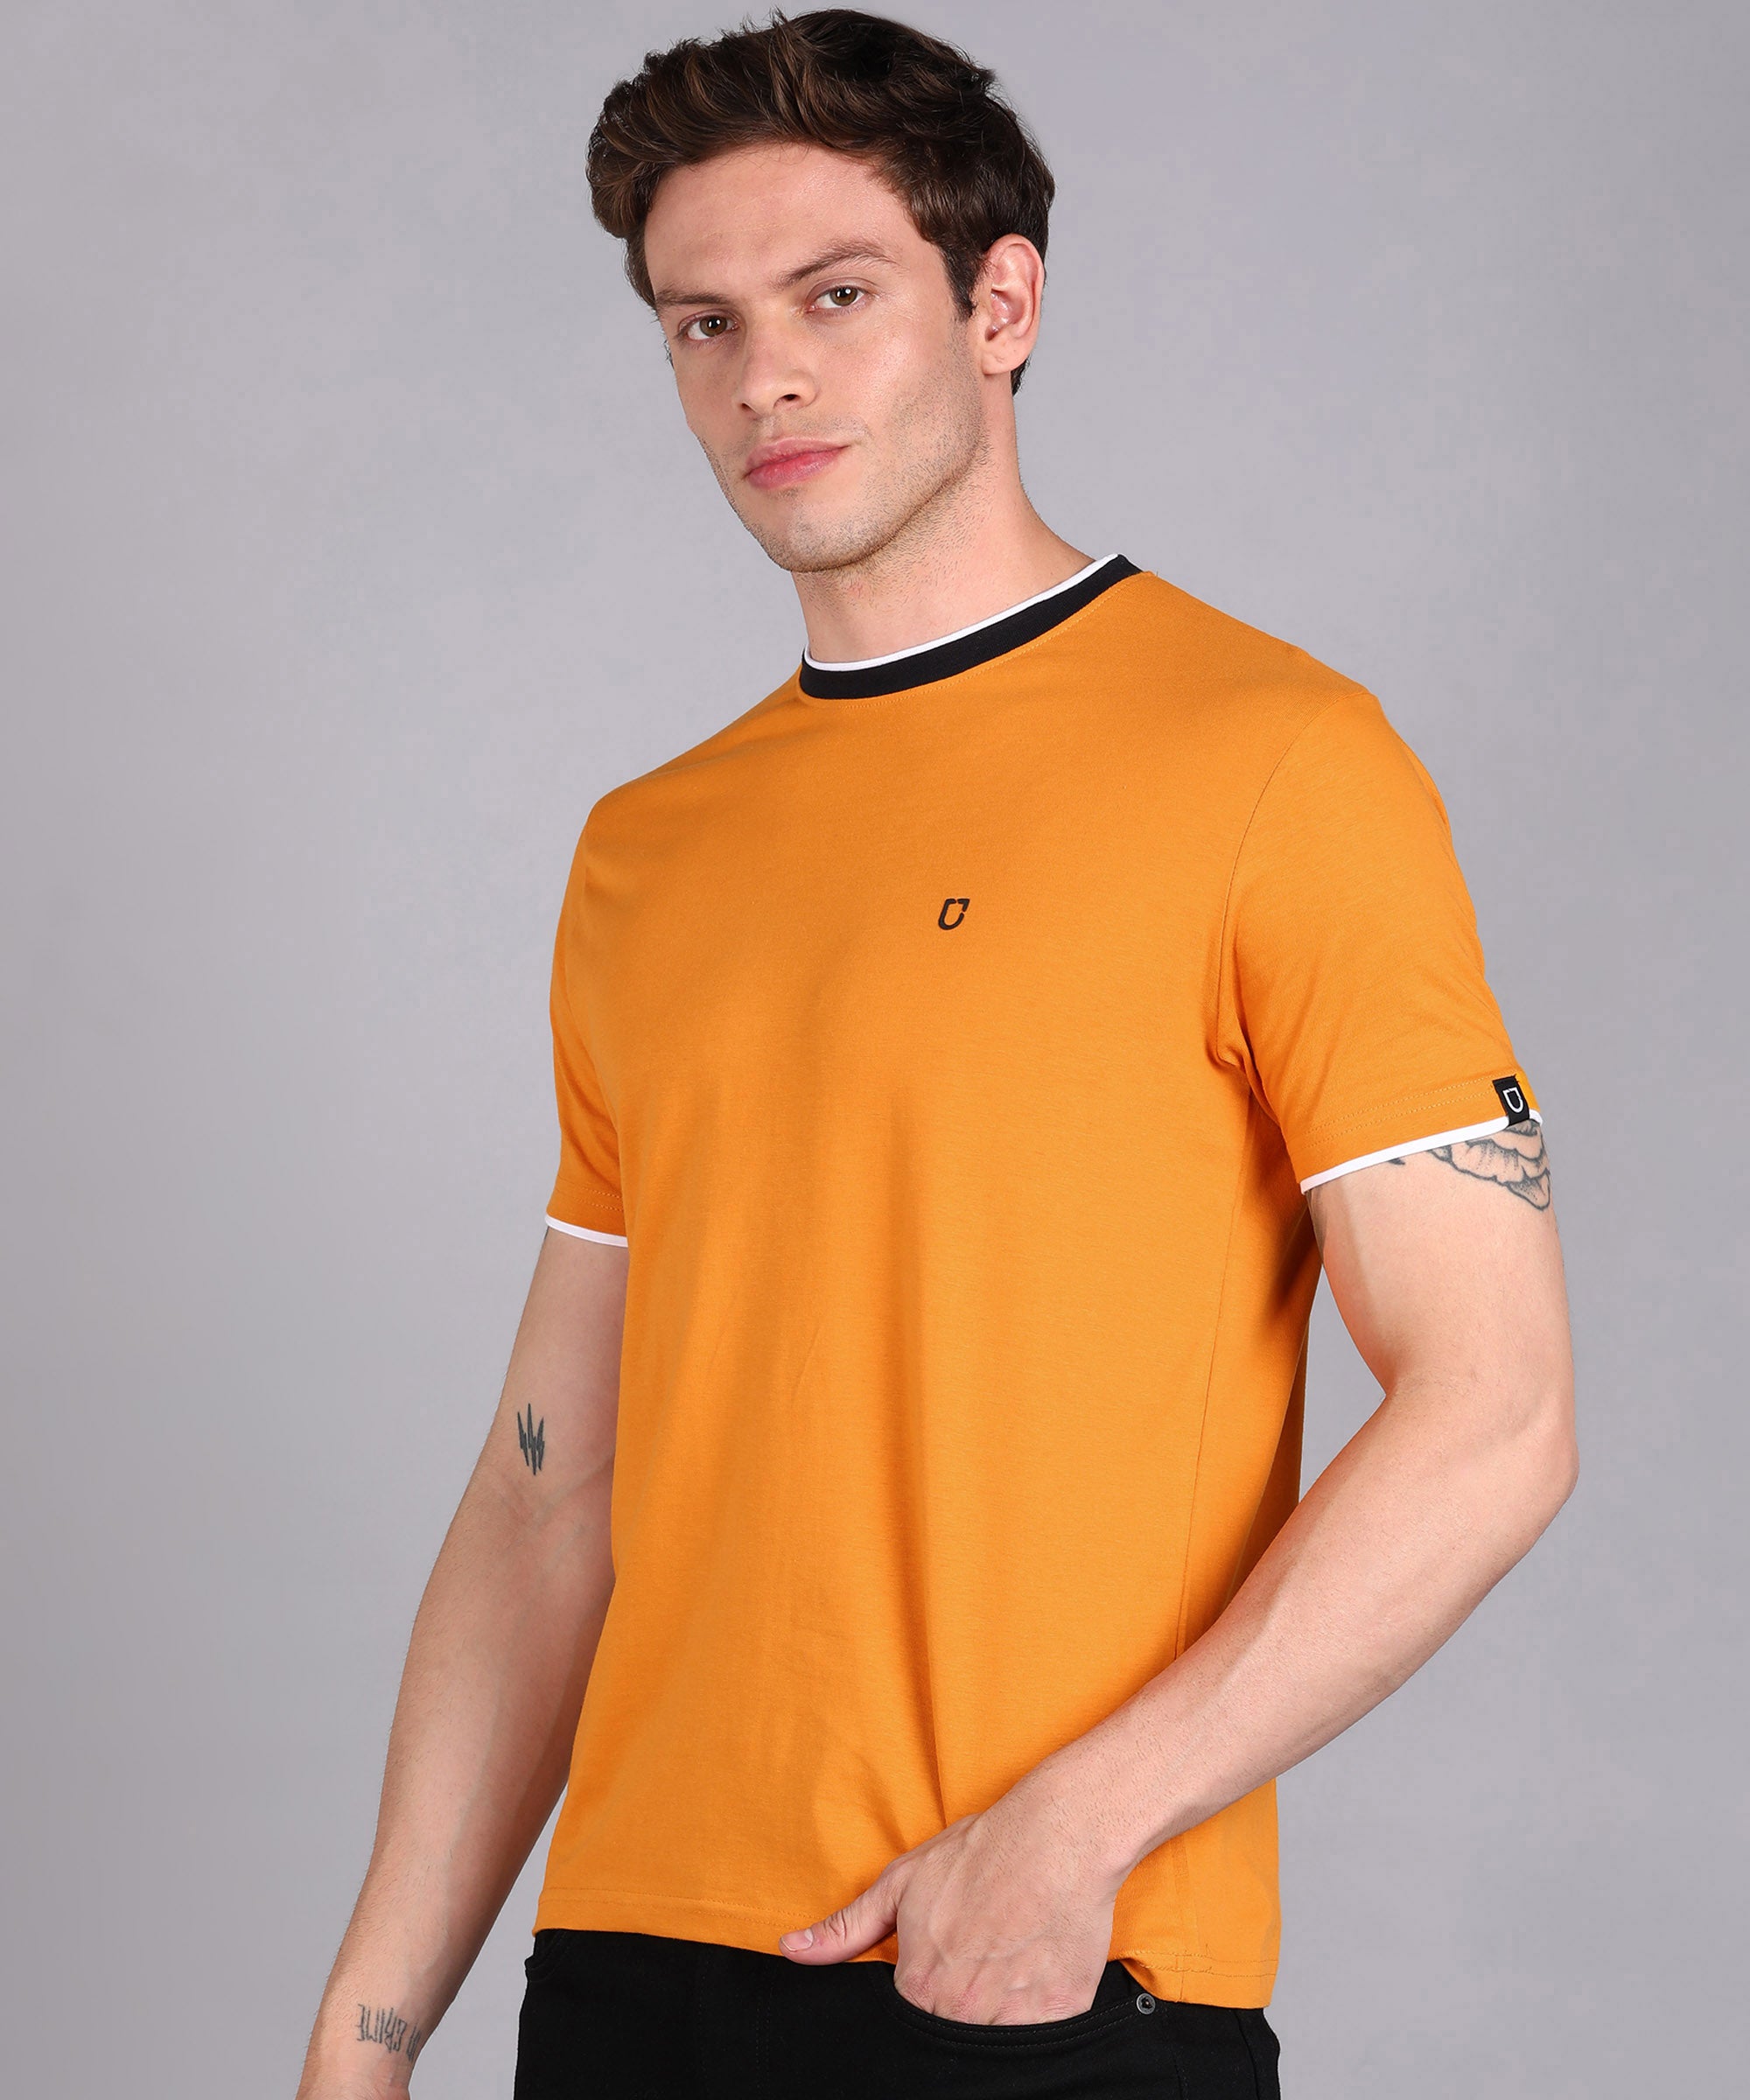 Men's Solid Gold Round Neck Half Sleeve Slim Fit Cotton T-Shirt